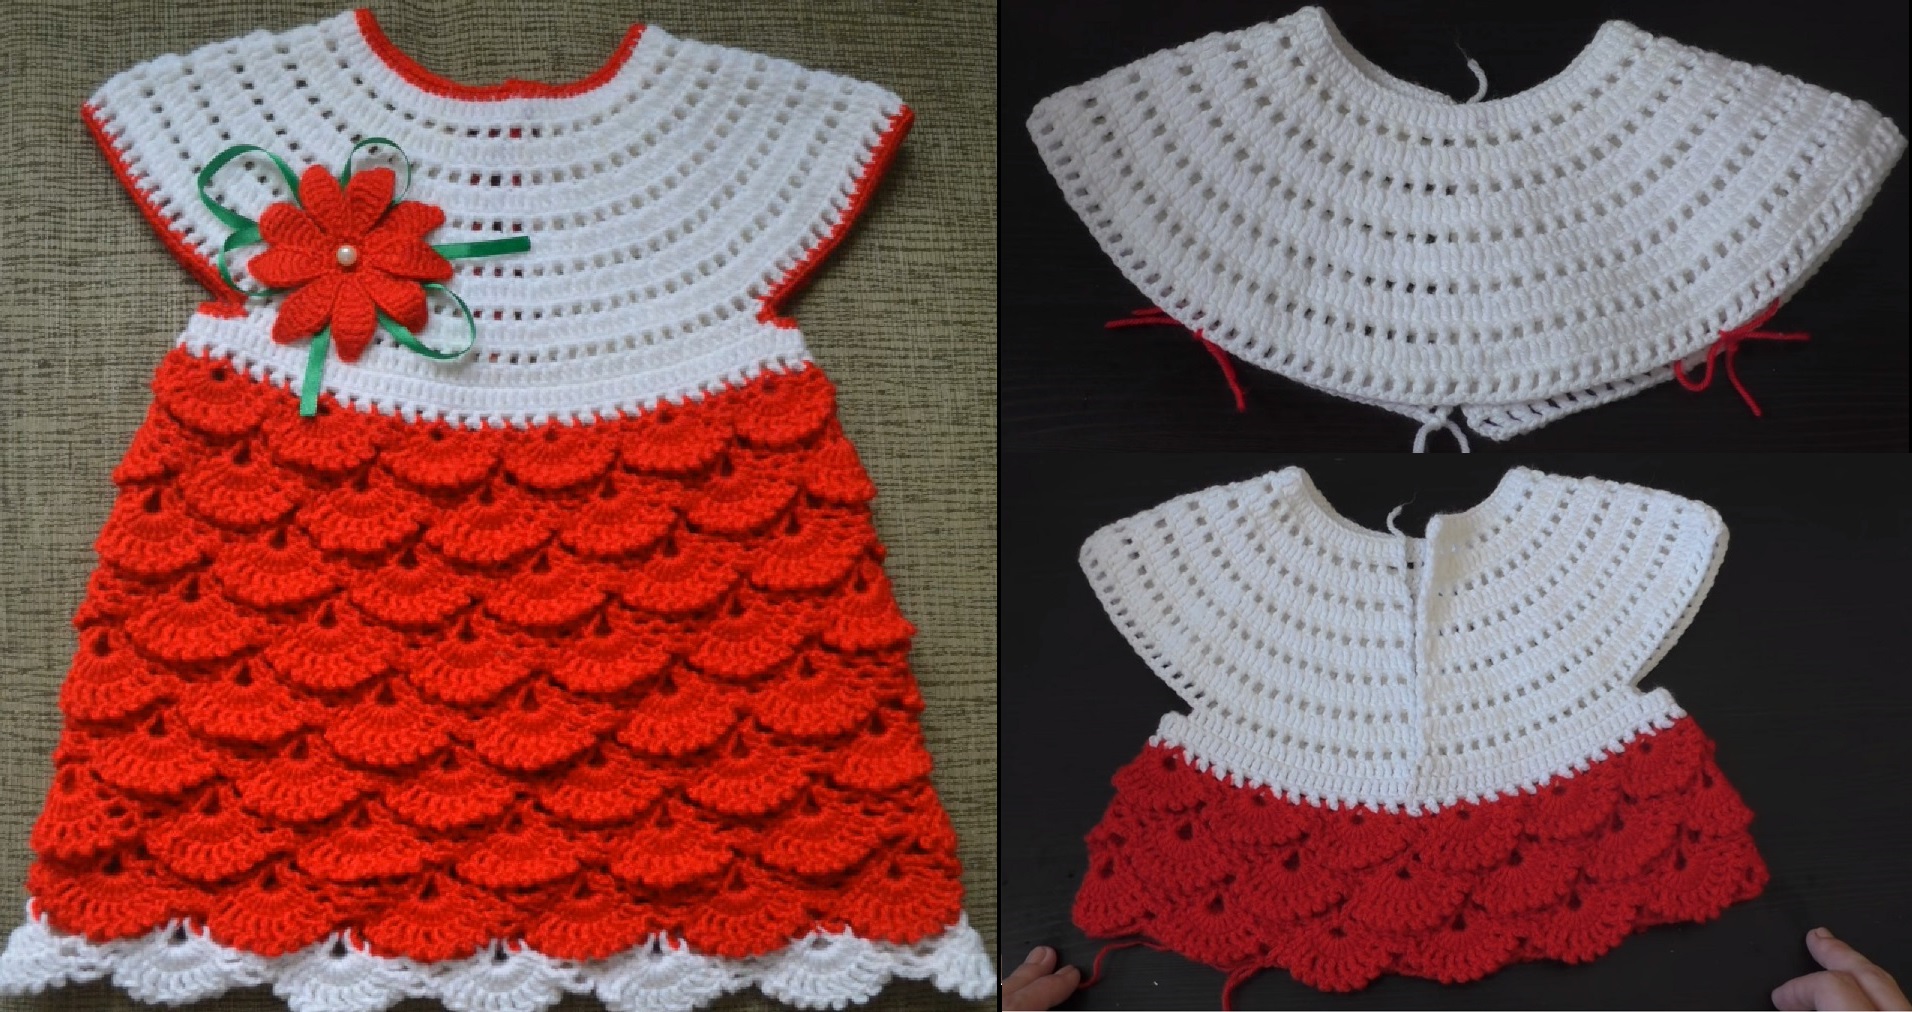 Crochet a Beautiful Baby Dress